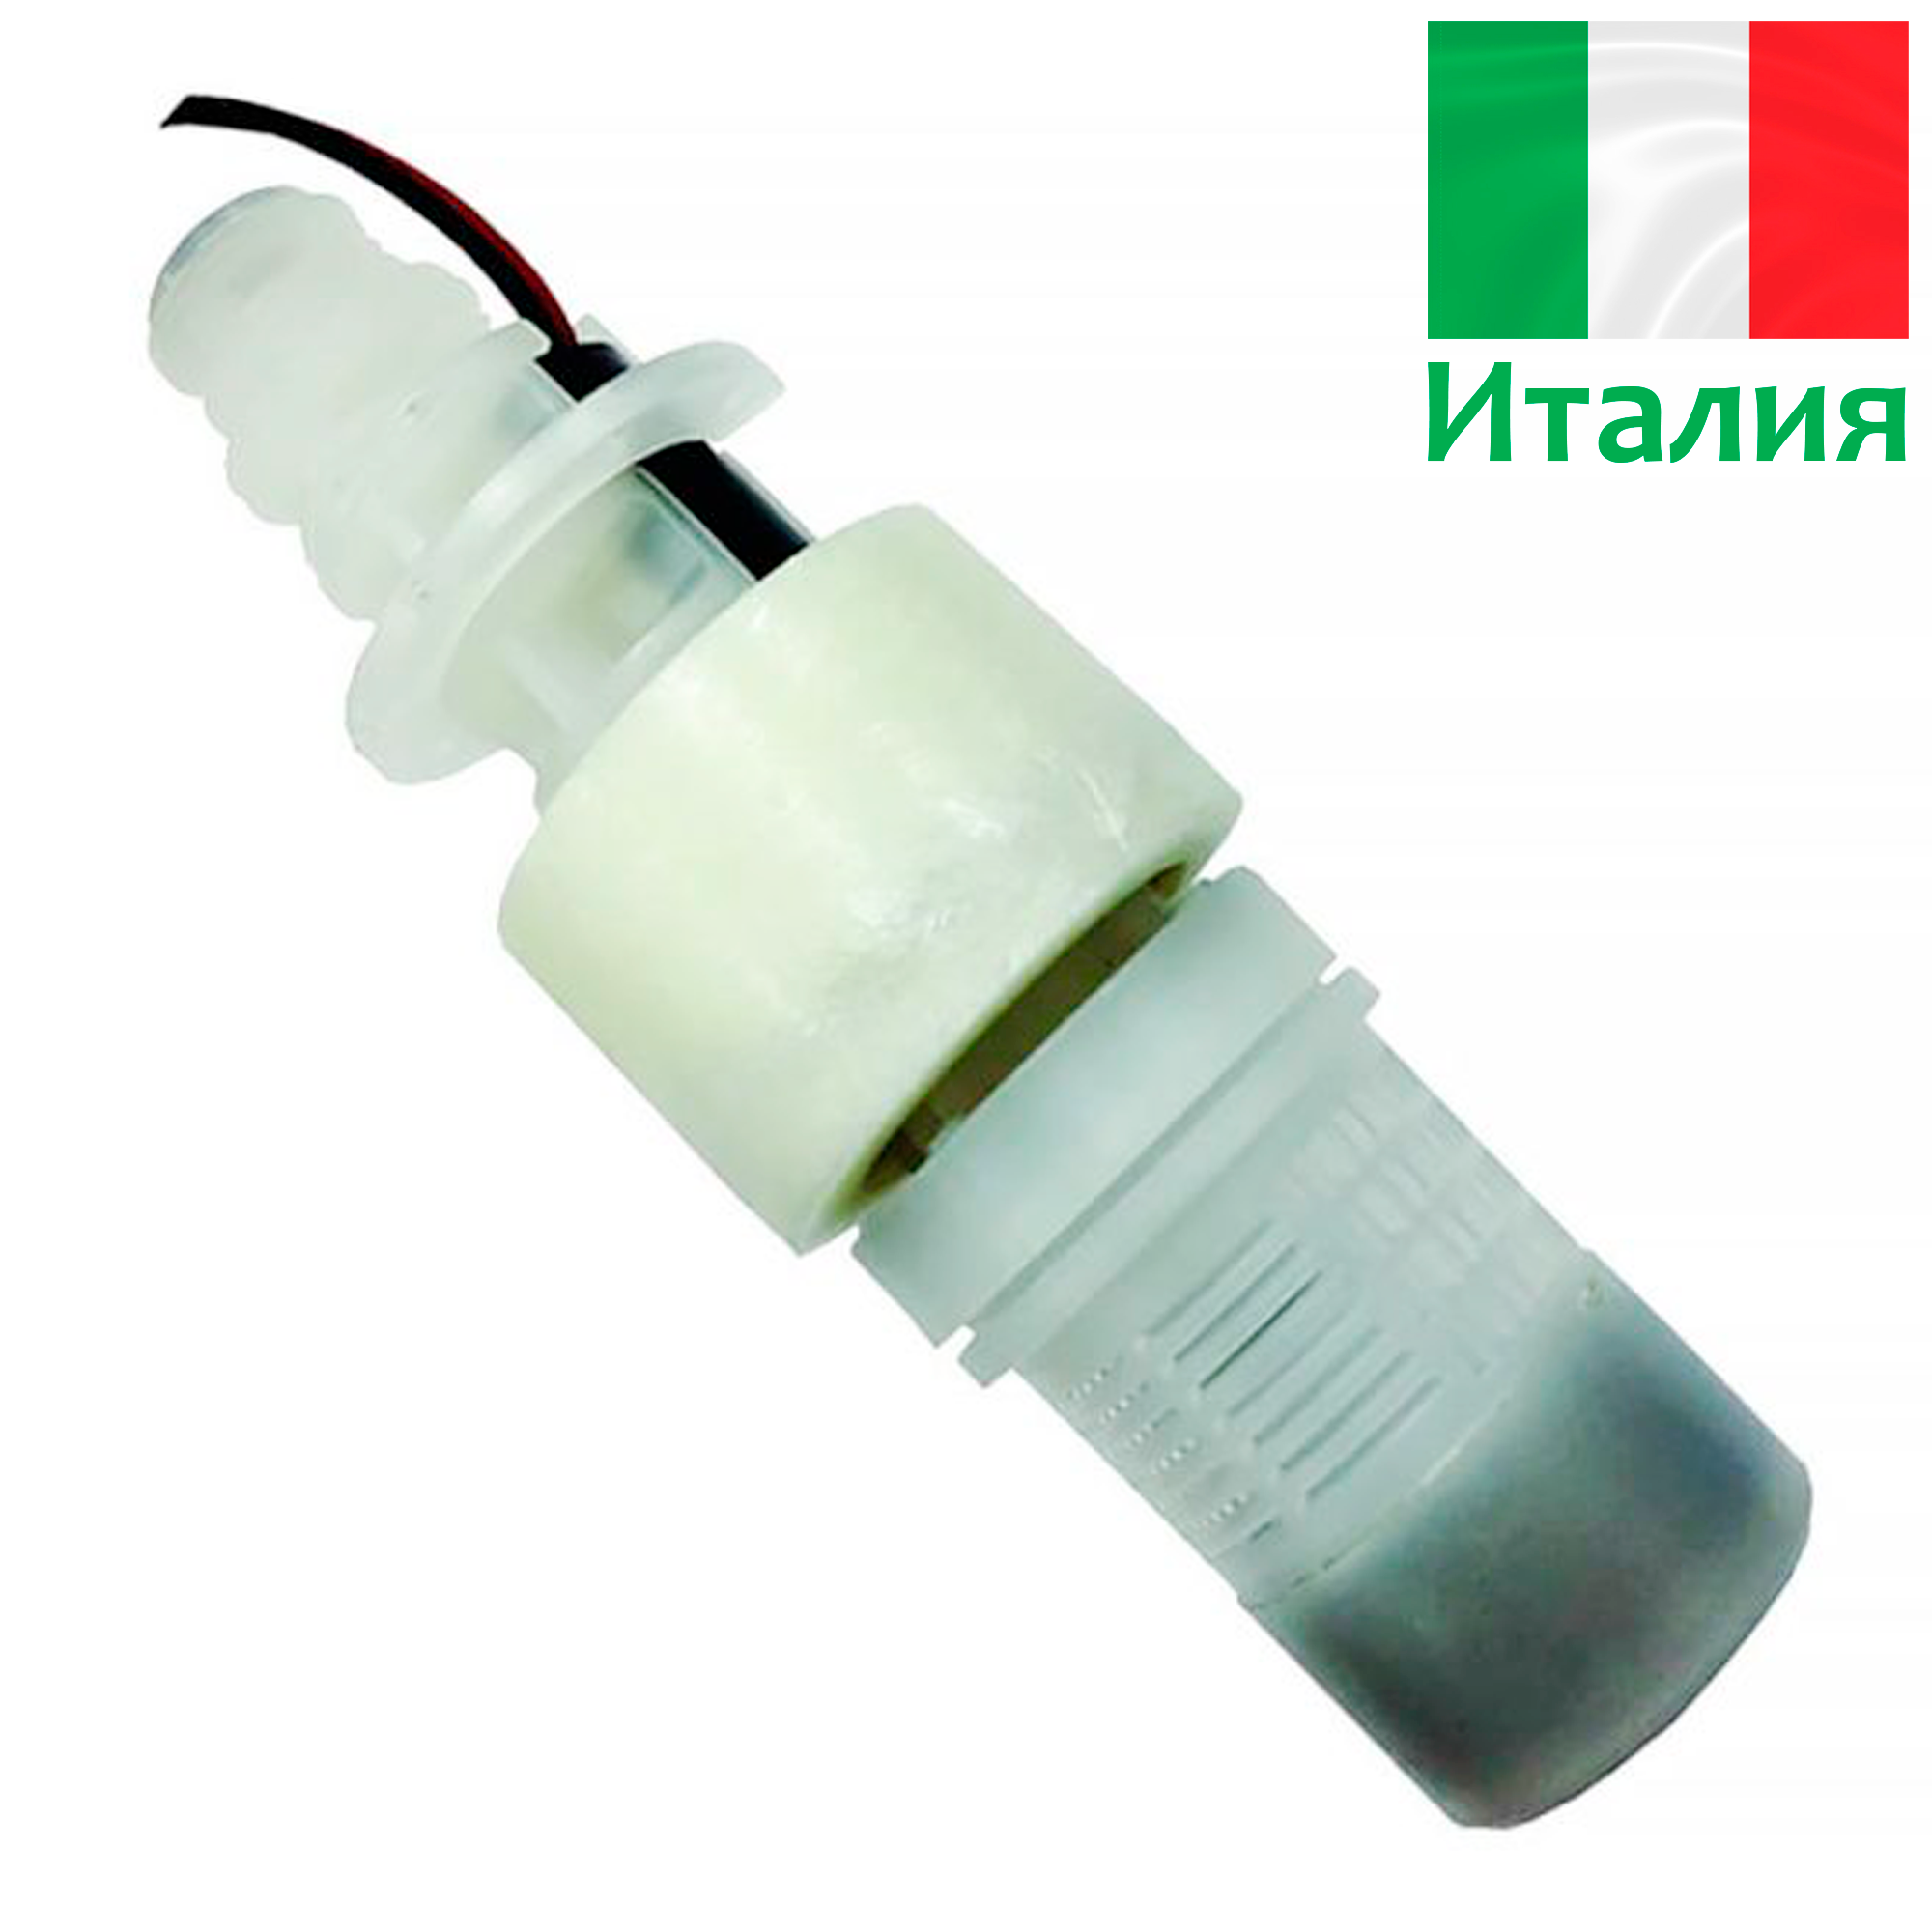 Клапан забора реагента из канистры с датчиком уровня до 80 л/ч - для шлангов 4х6, 6х8, 10х14 мм - ПП-Витон - SFT0130002, Etatron, Италия